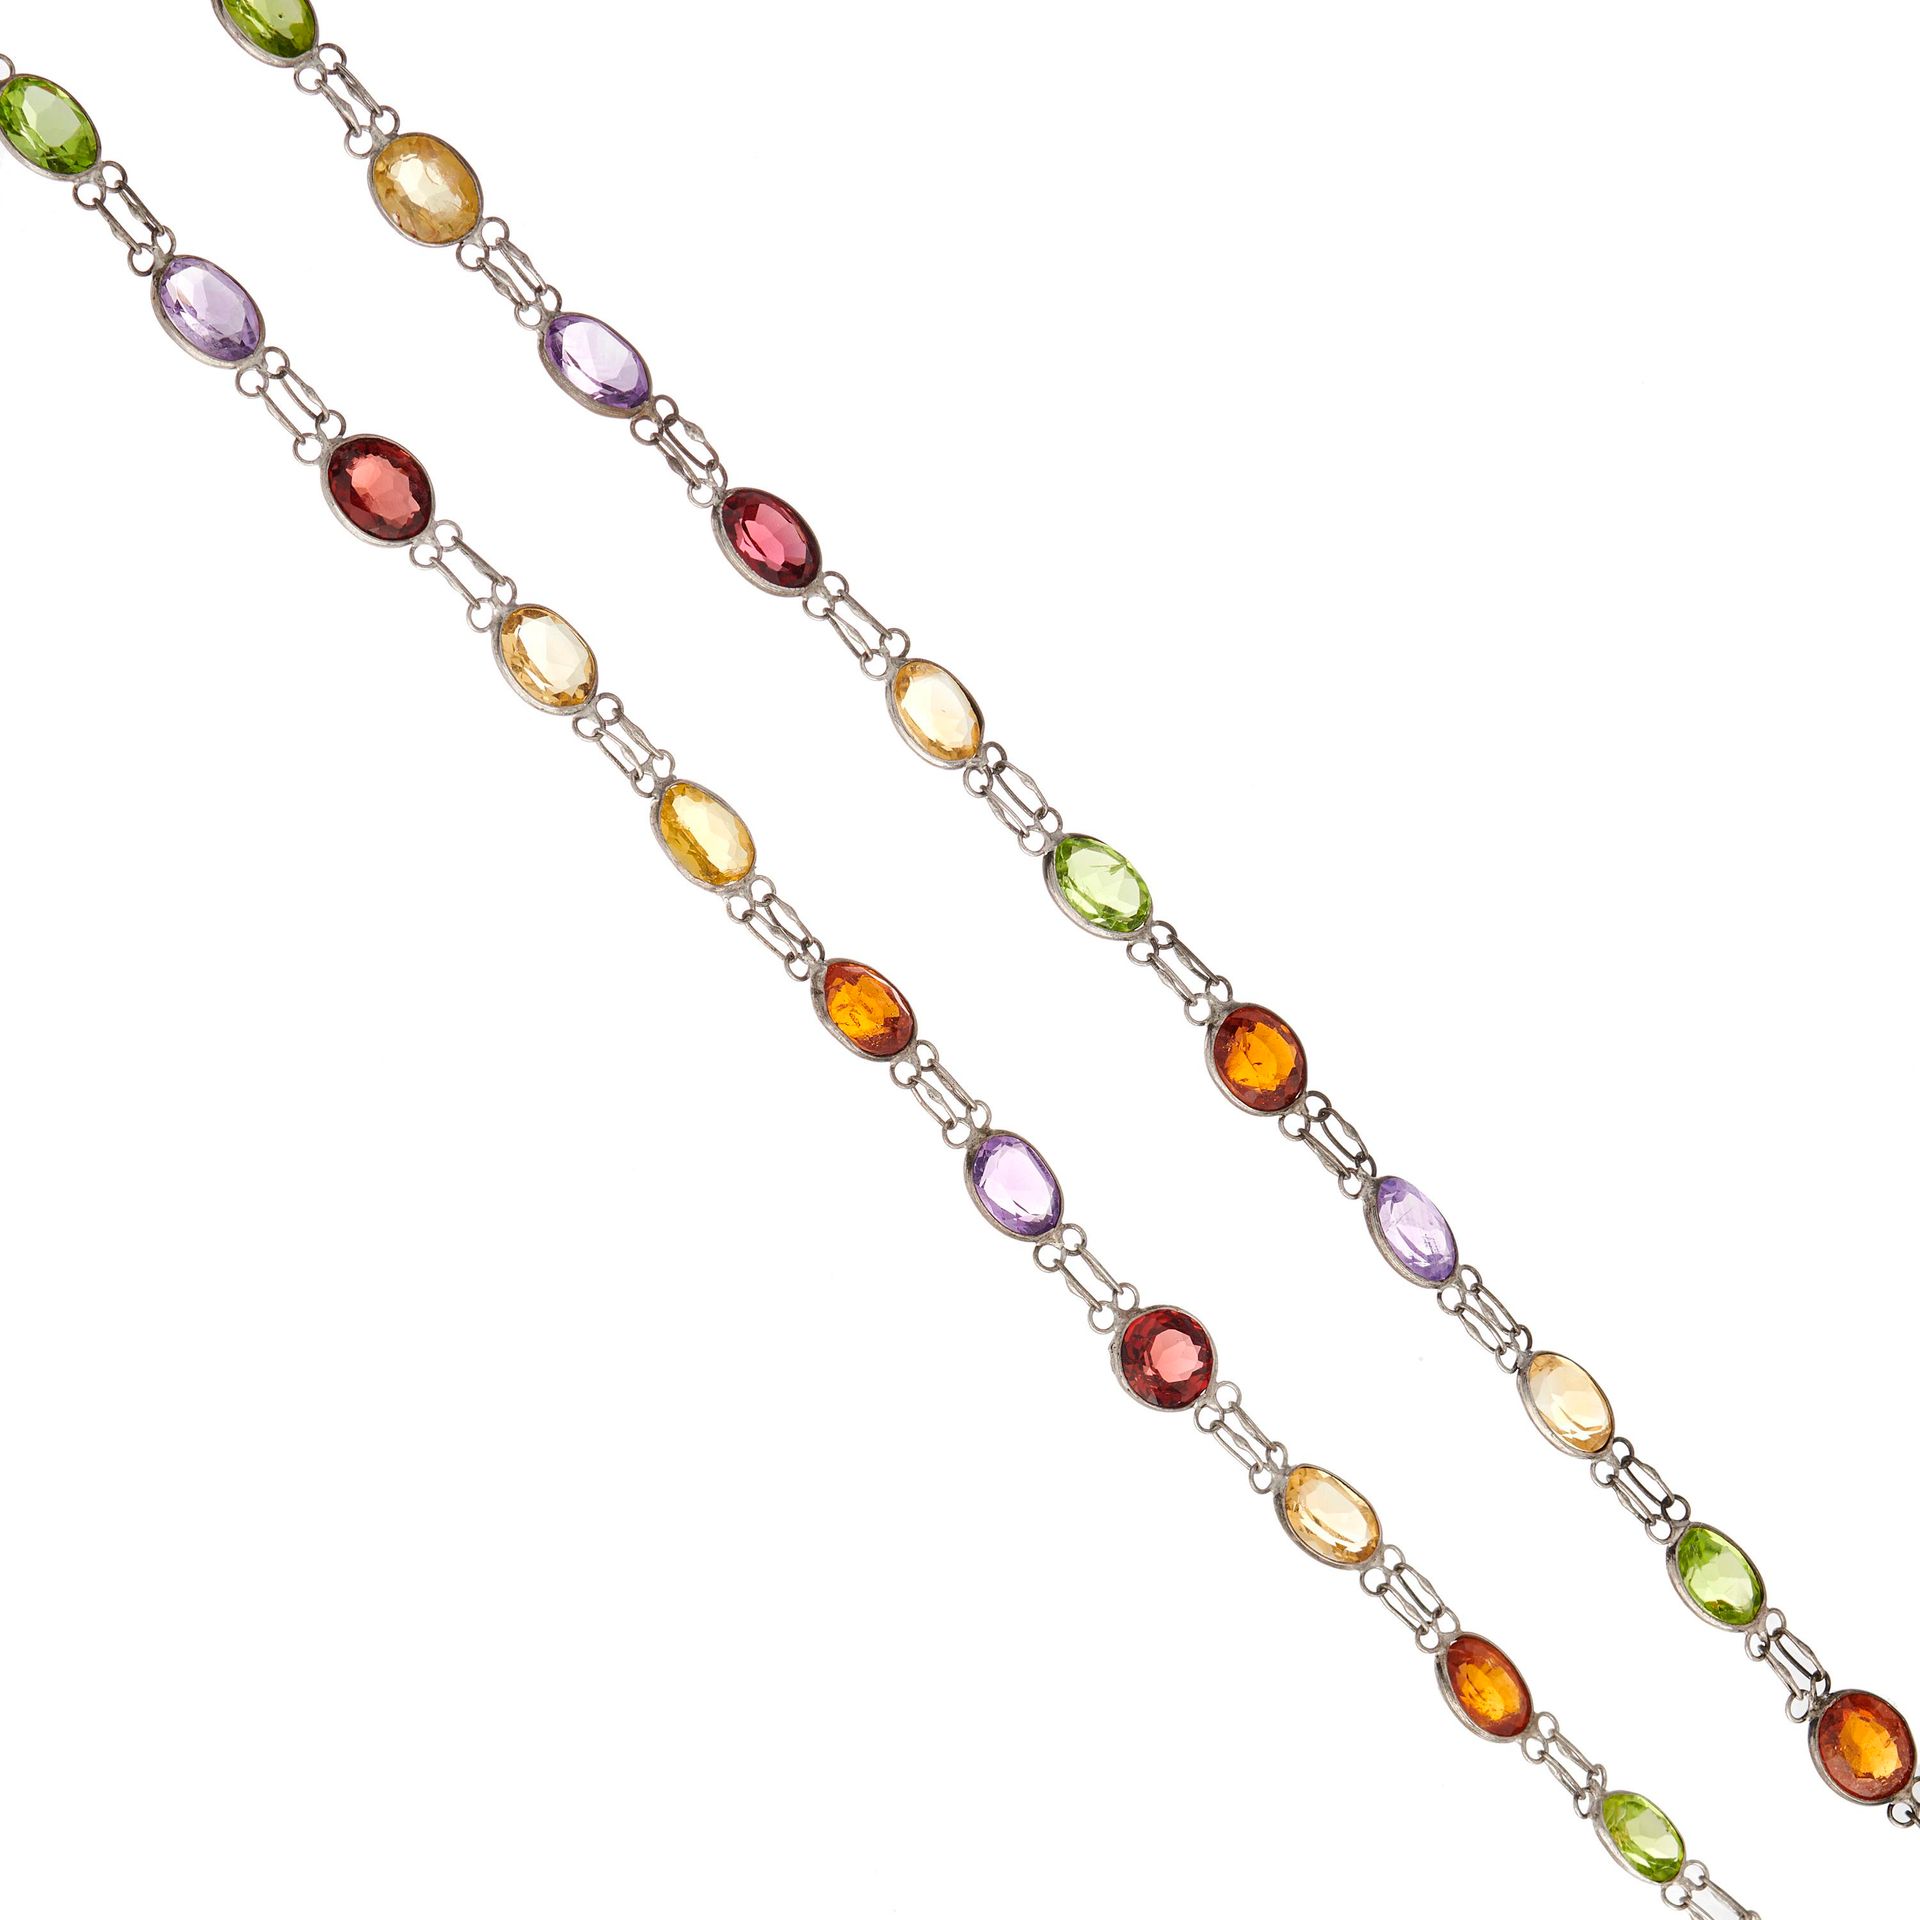 Null 一条银质的哈雷克多宝石项链，设计成一系列椭圆形的链接，宝石包括红石榴石、杏仁石榴石、橄榄石、紫水晶、黄水晶和黄宝石，带有S形钩扣，长90厘米。18克 &hellip;